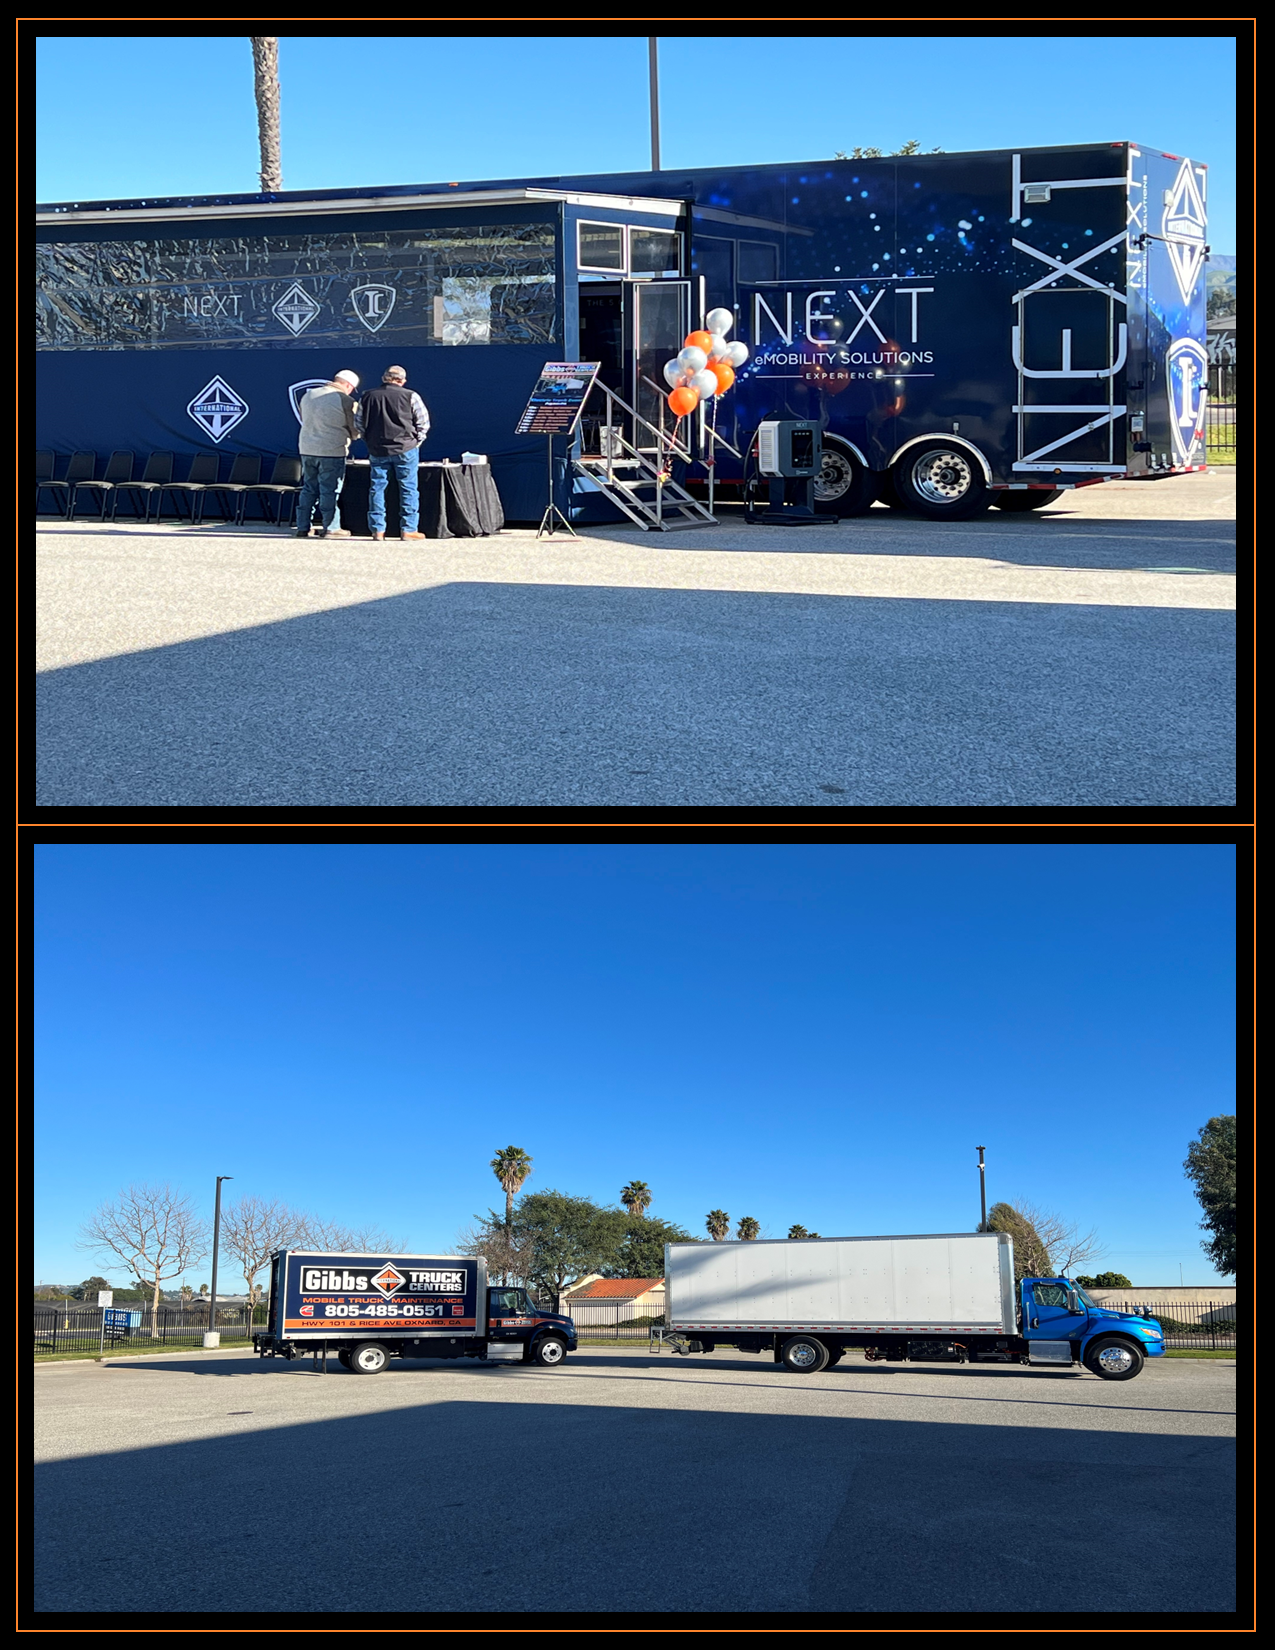 EMV Truck Event Collage